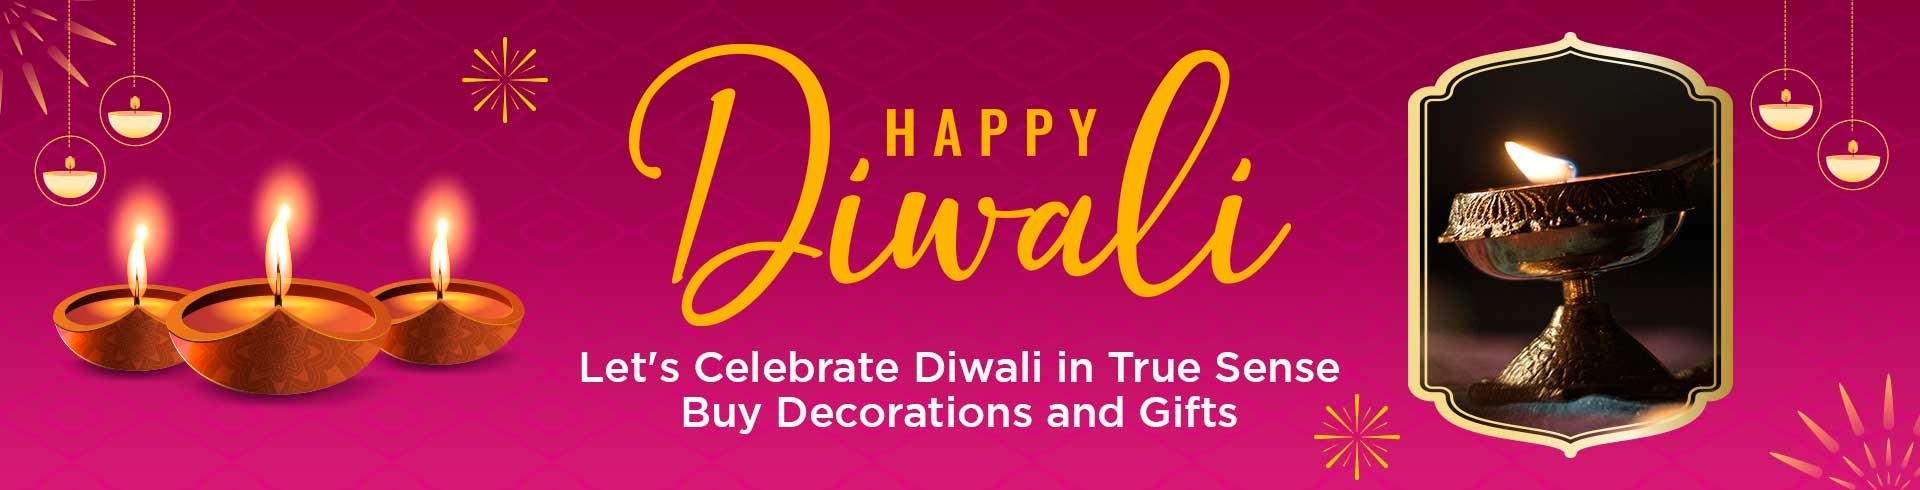 Diwali Decoration Gifts-banner